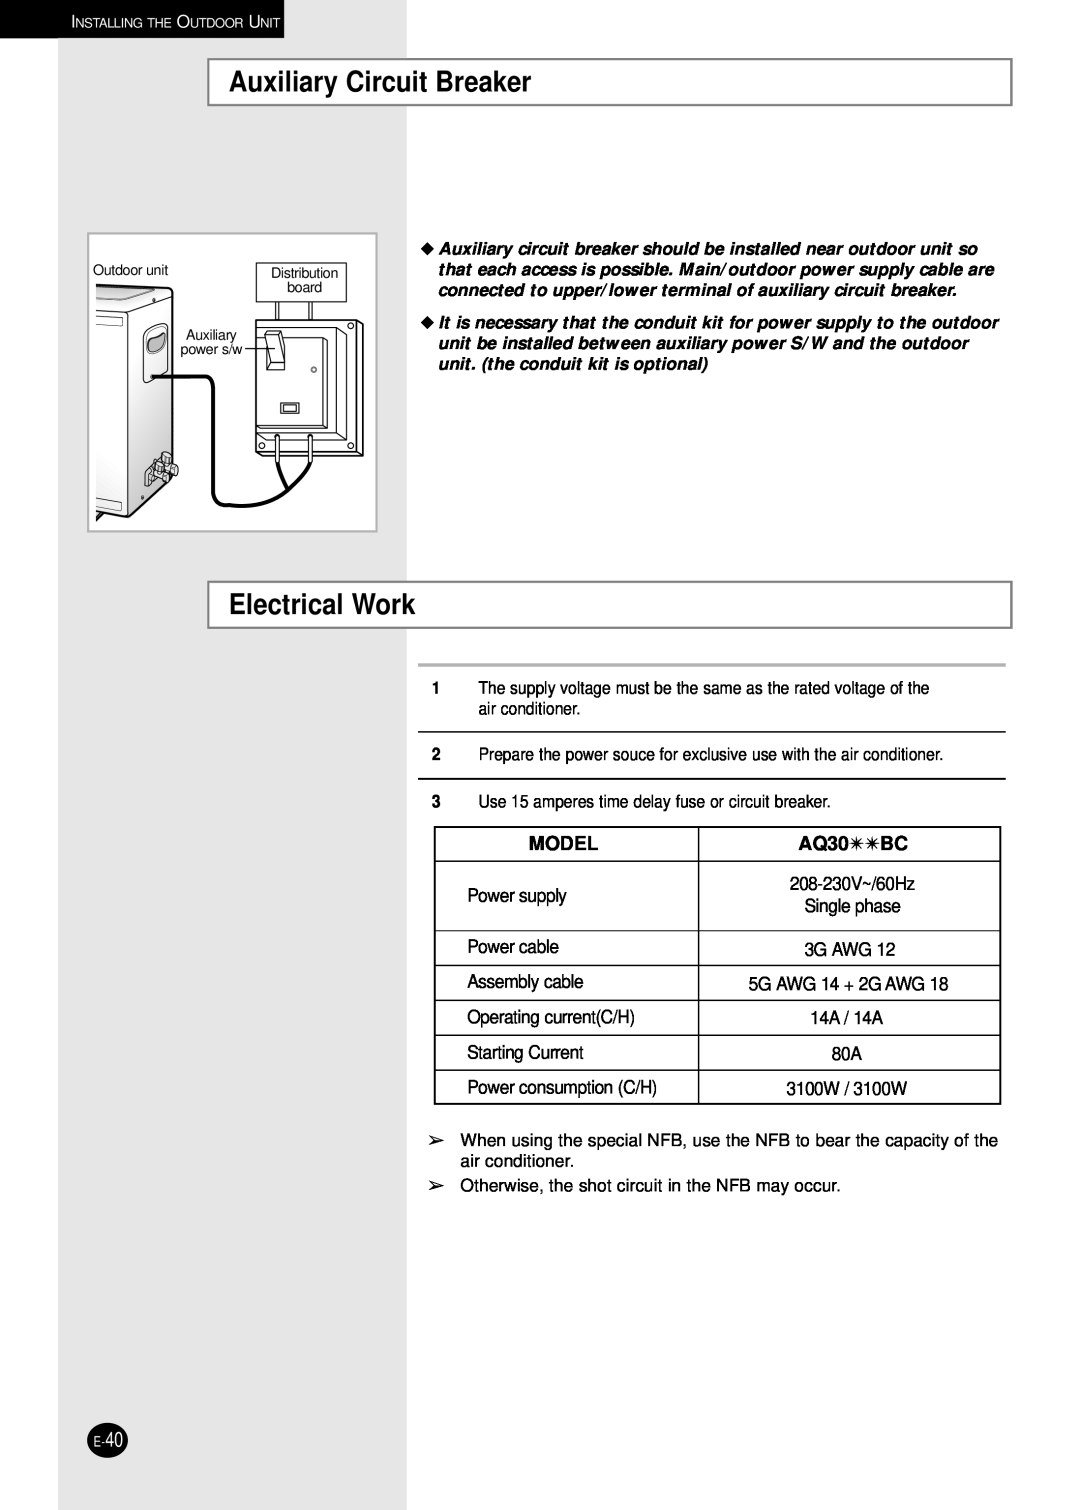 Samsung AQ30C1(2)BC installation manual Auxiliary Circuit Breaker, Electrical Work, Model, AQ30BC 